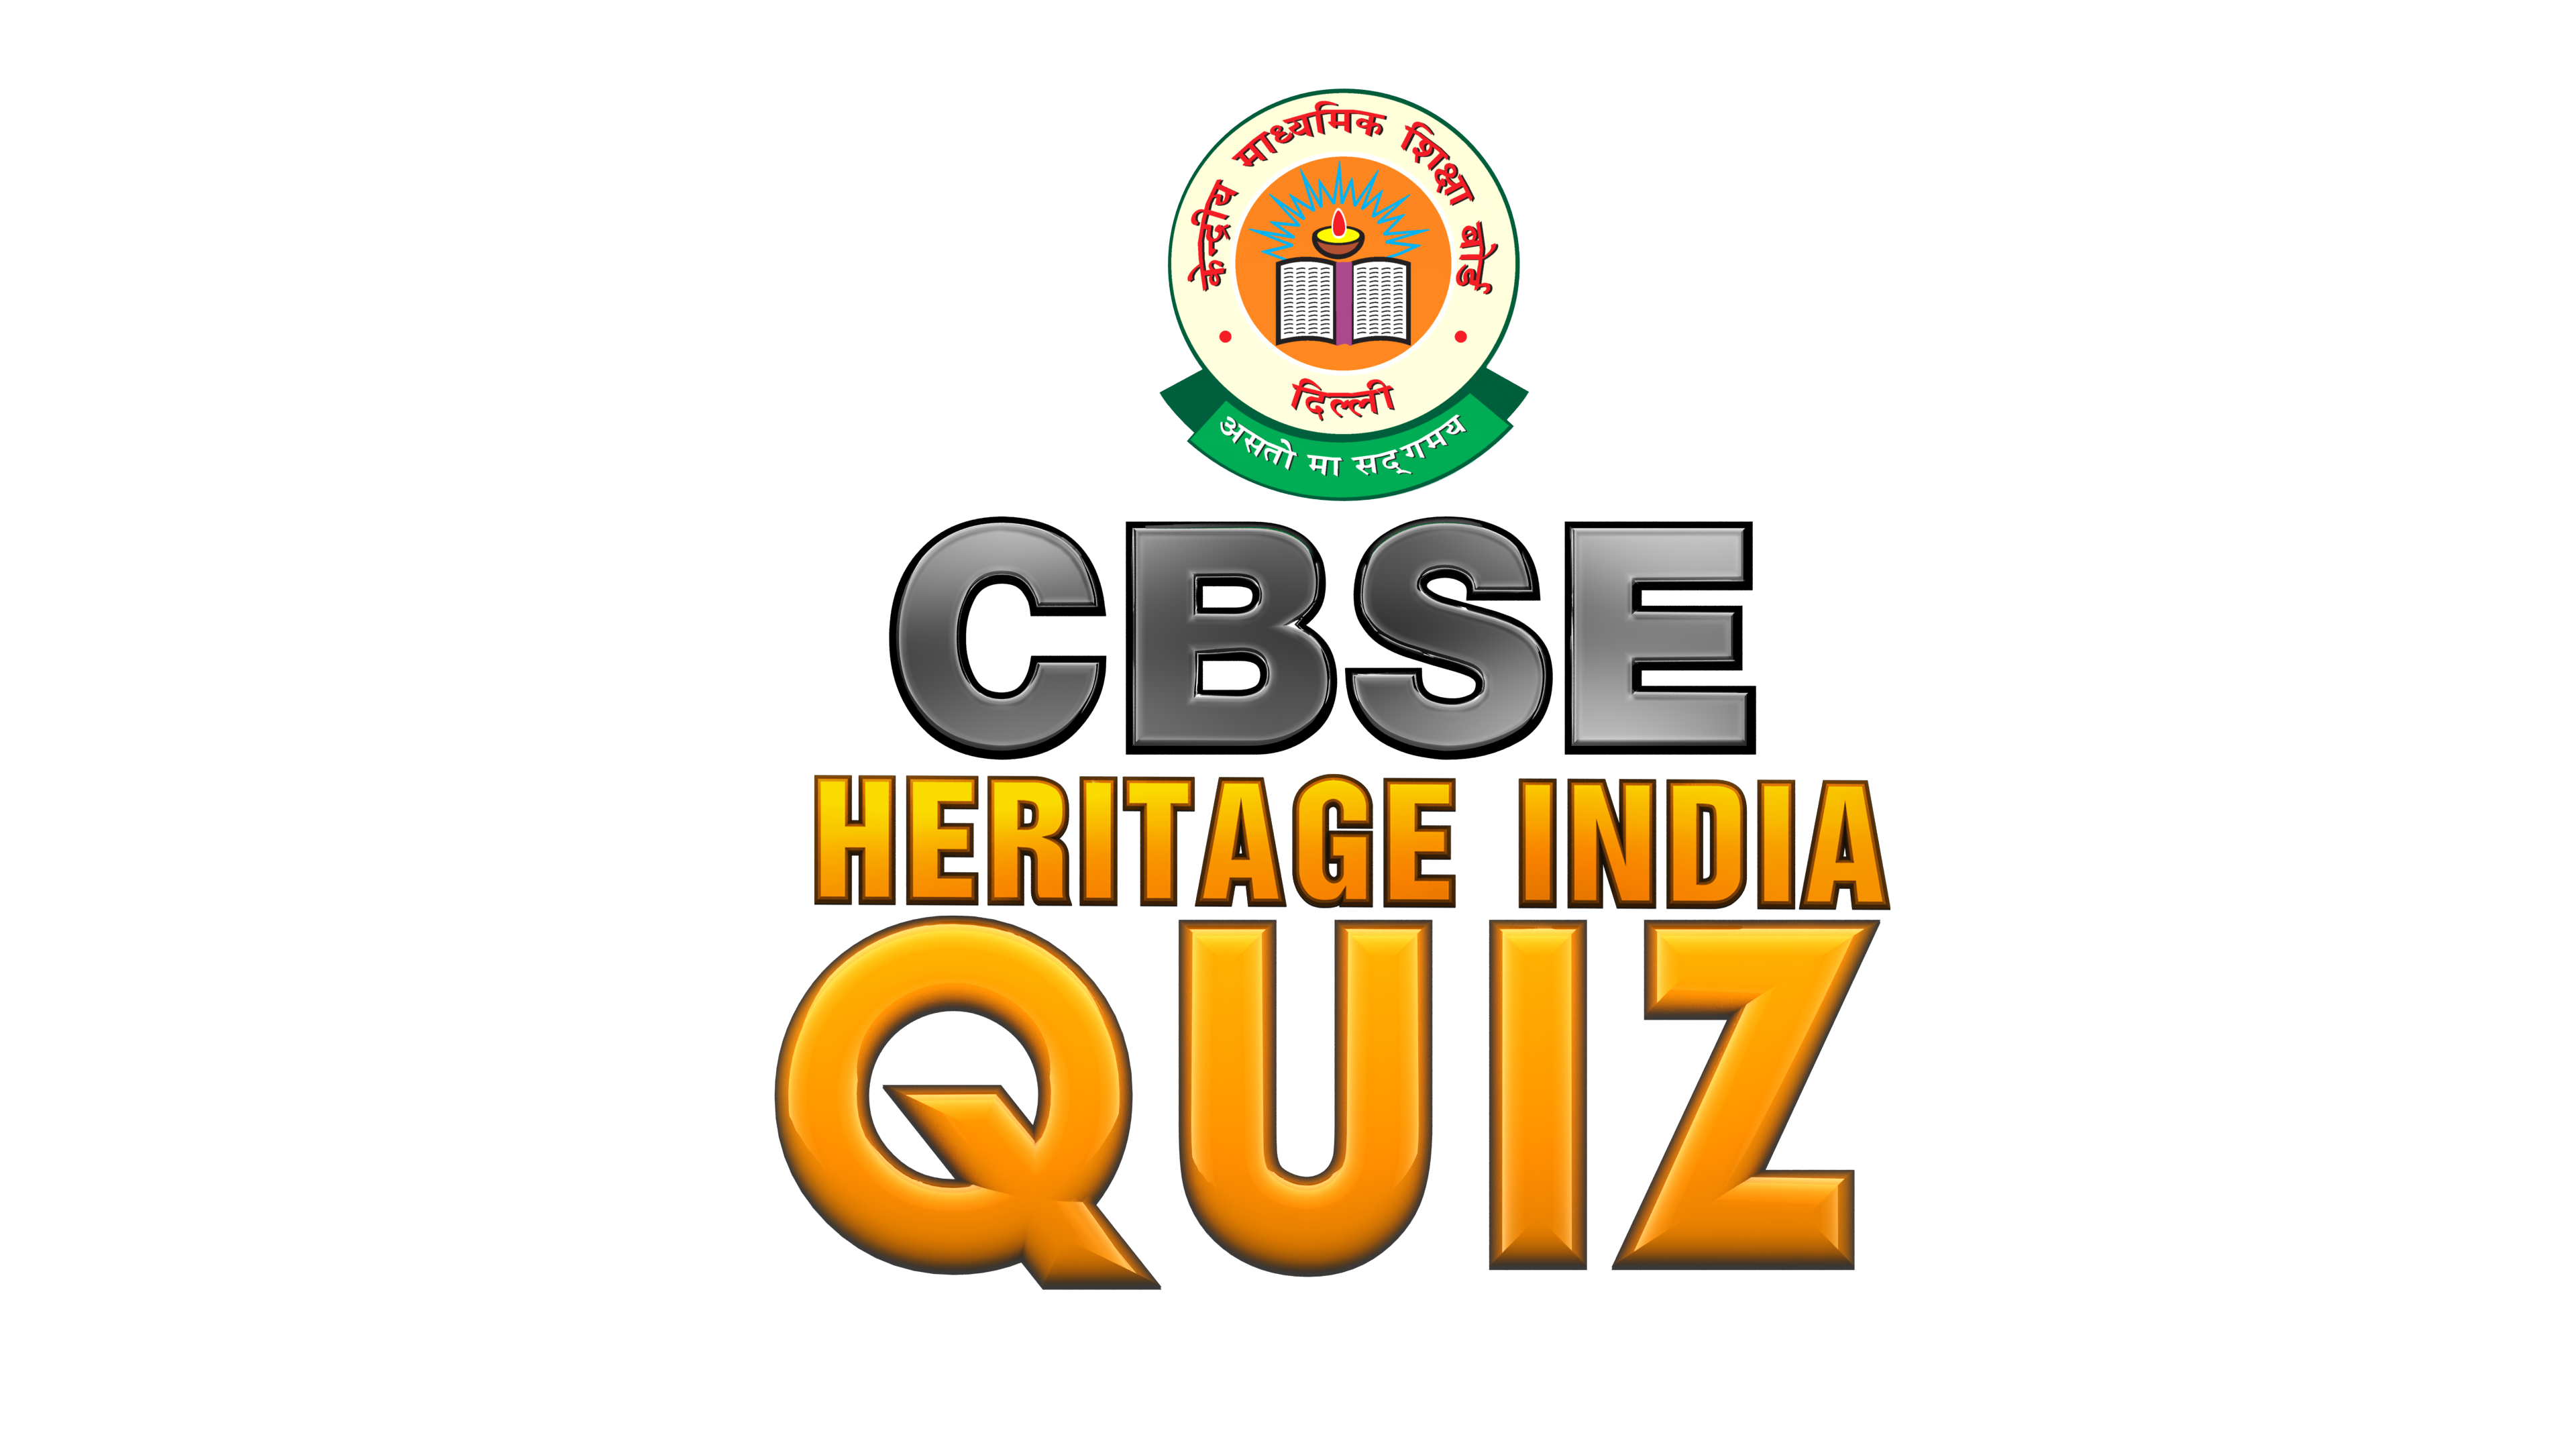 CBSE Heritage India Quiz